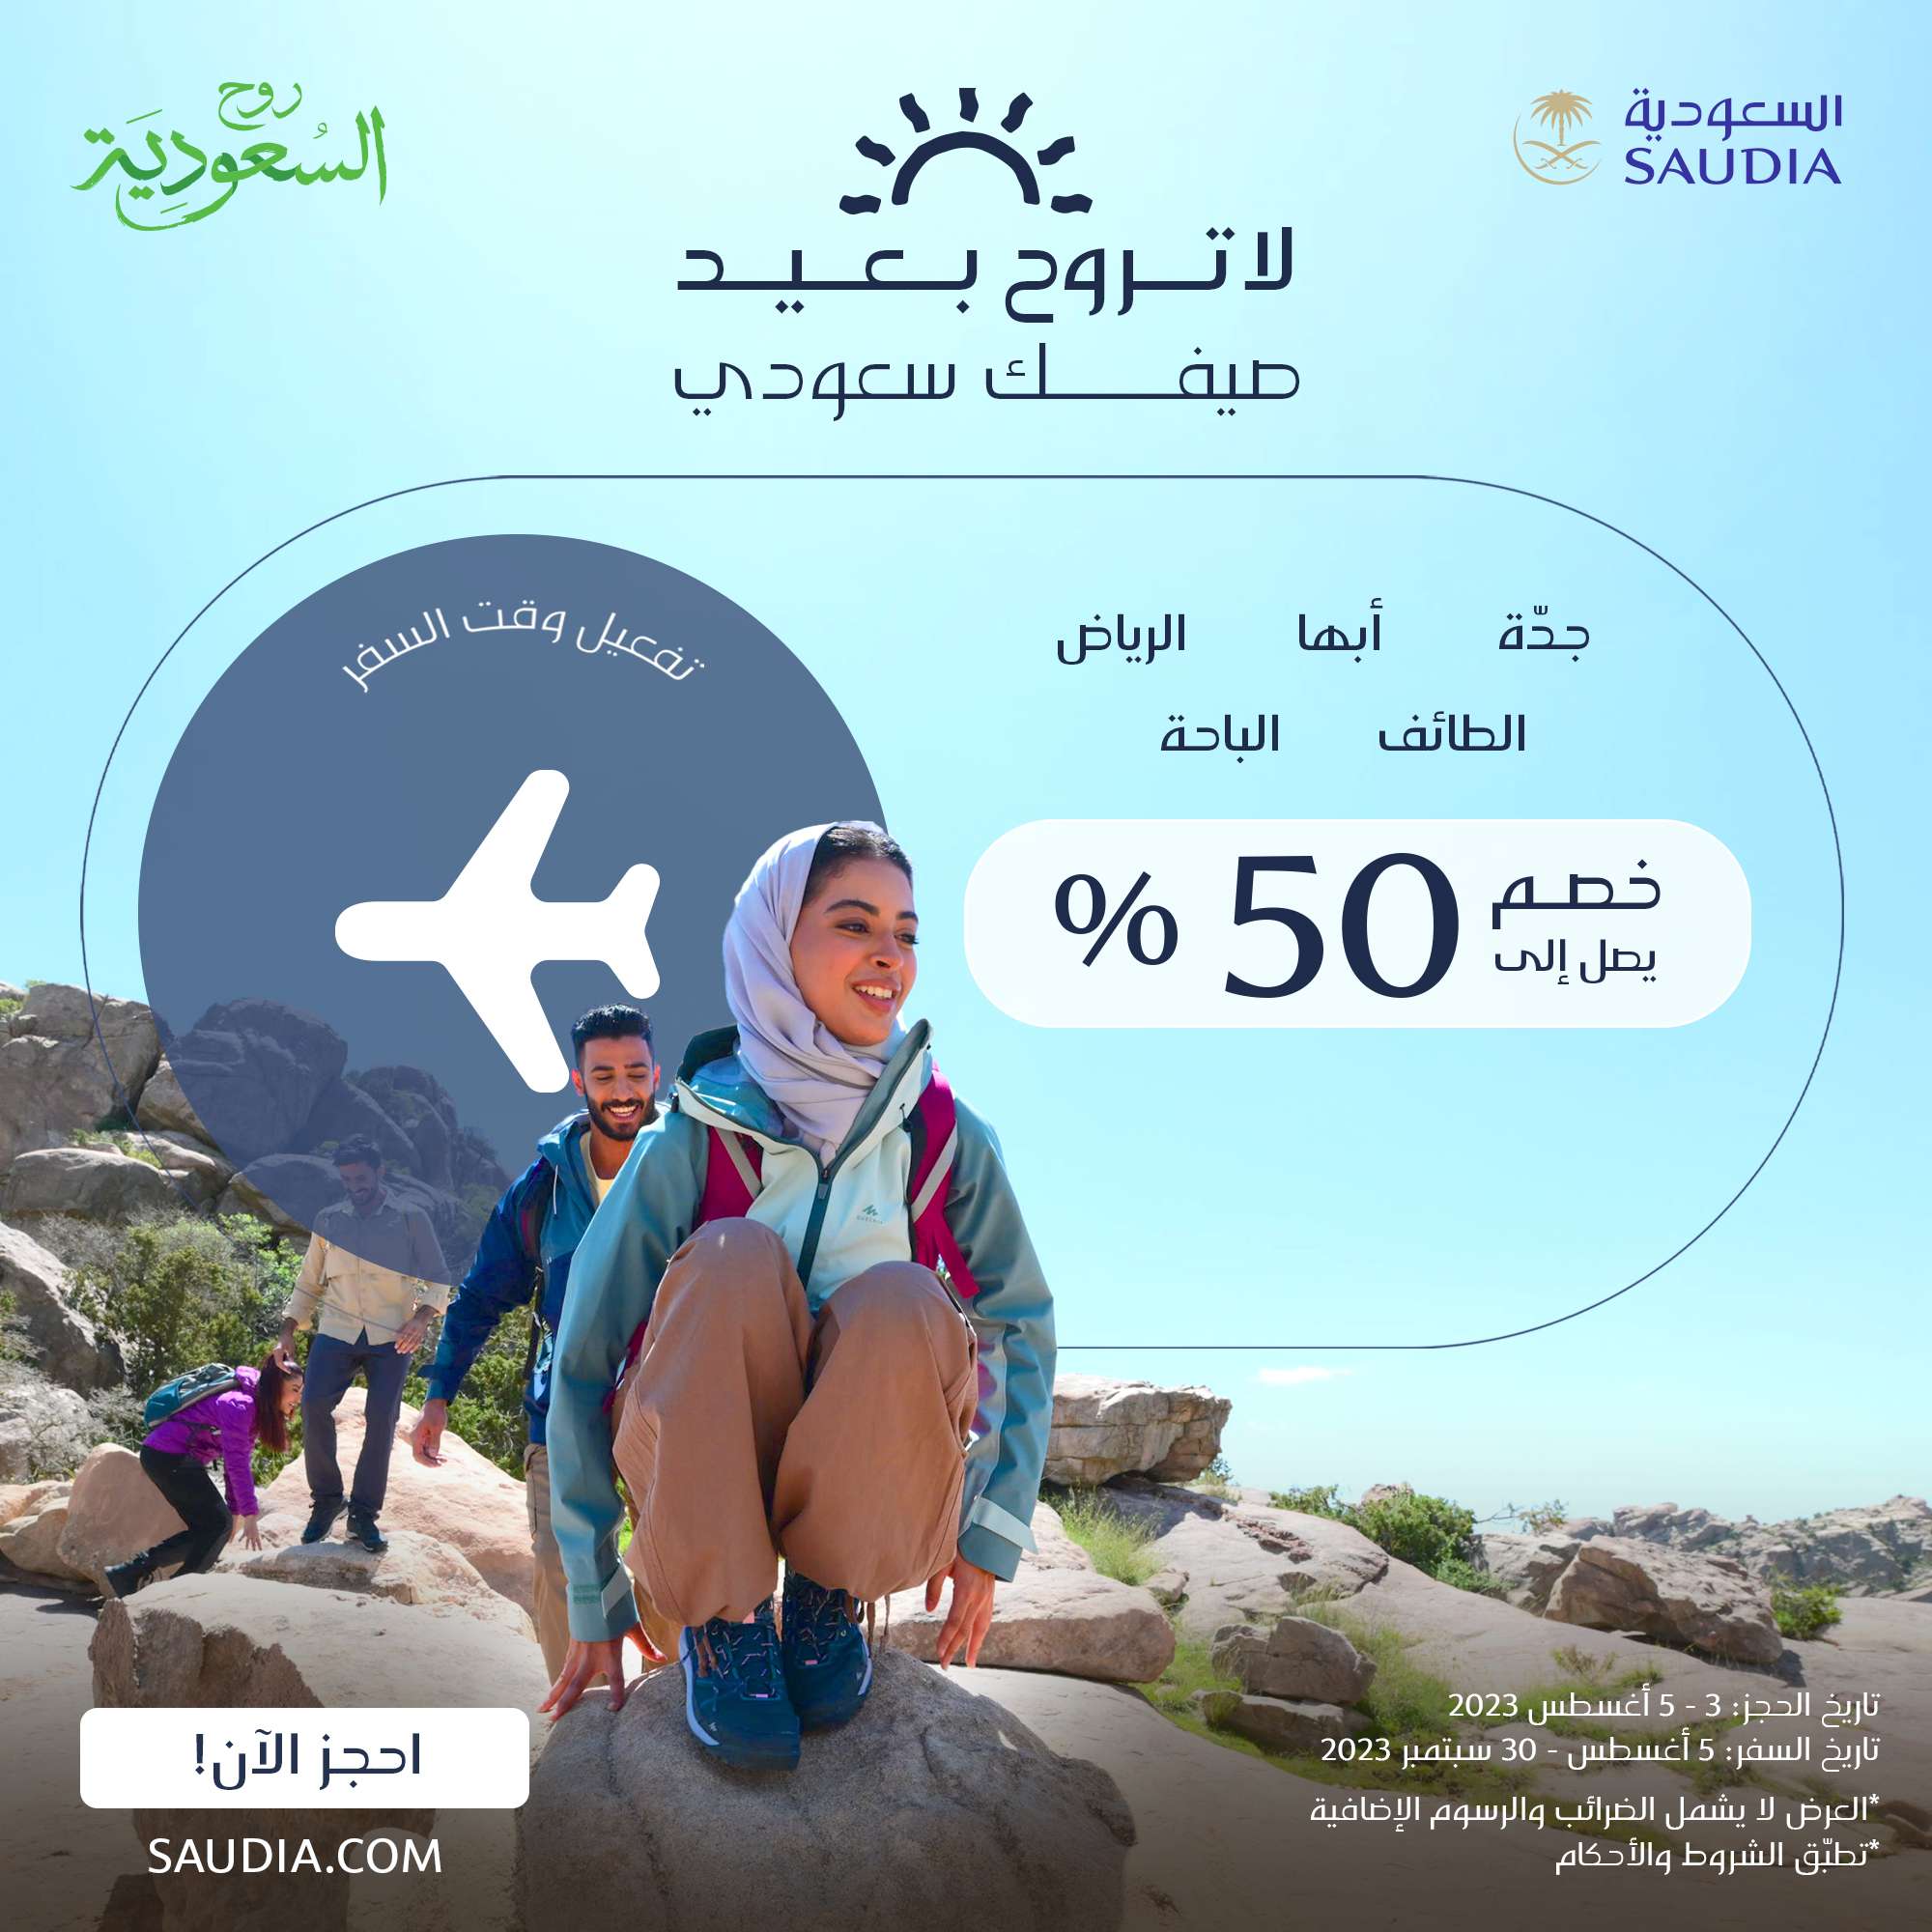 QUl1LO - عروض الخطوط السعودية وخصم 50% علي رحلات إلى الرياض- الطائف - أبها -وجدة